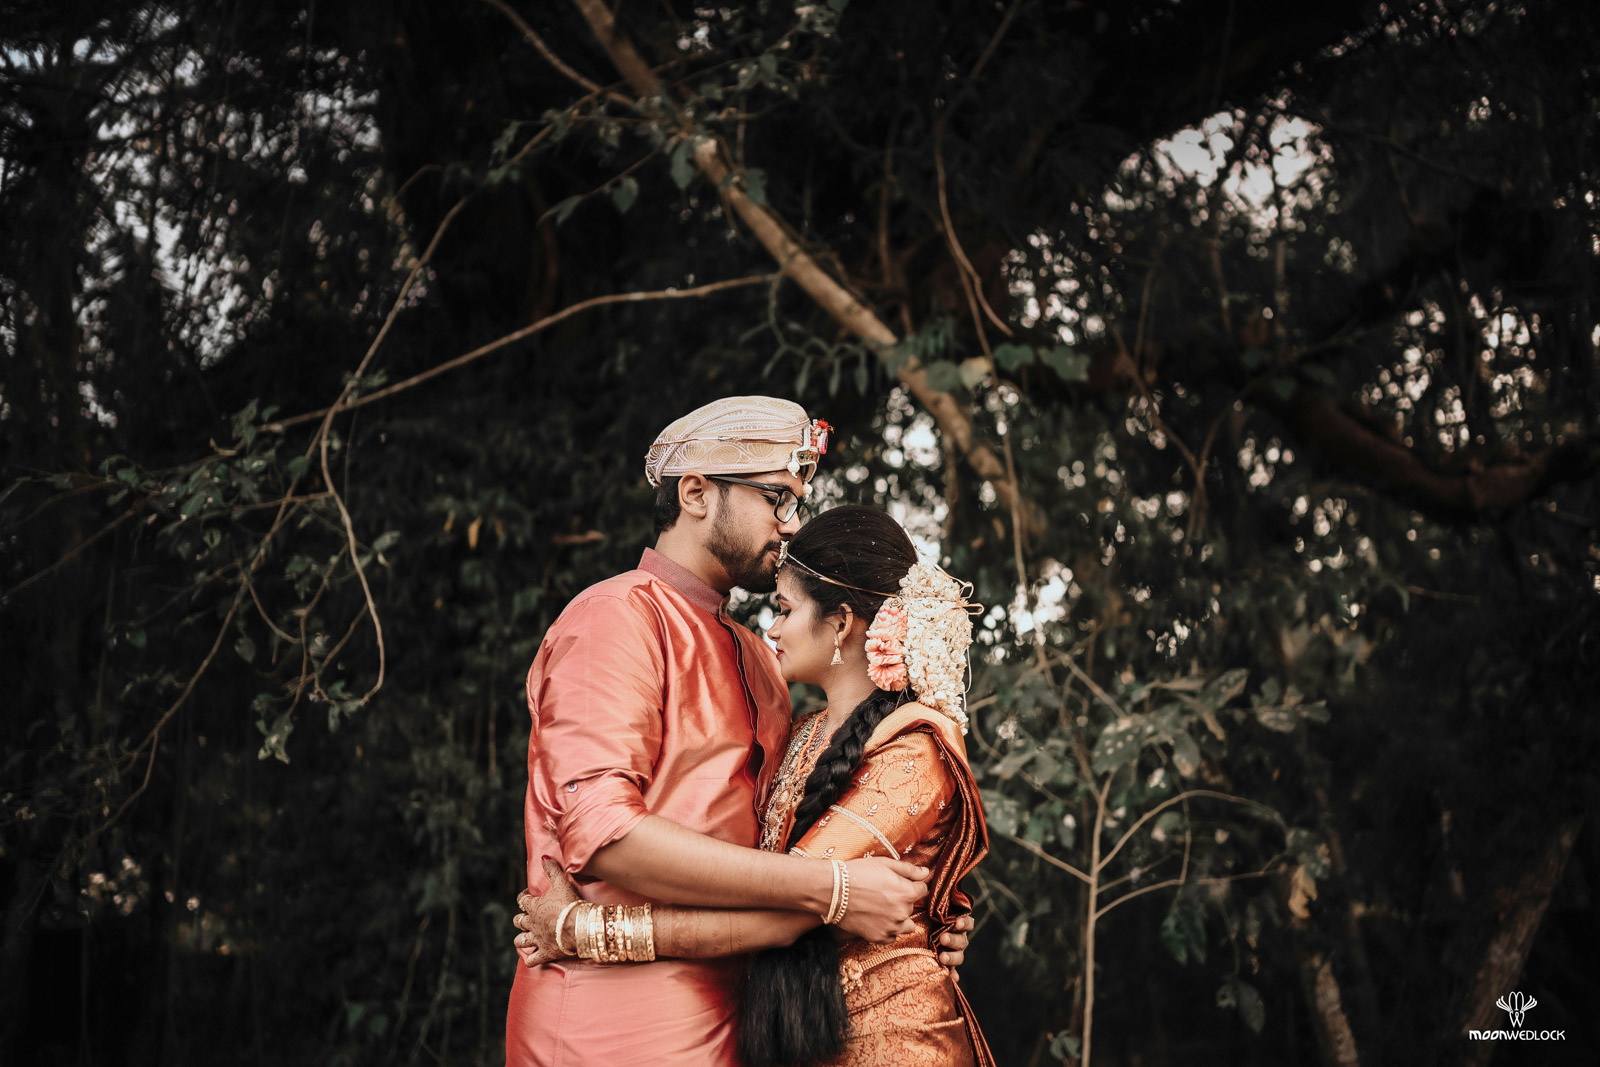 kannada-wedding-photographers-in-bangalore-moonwedlock (64)